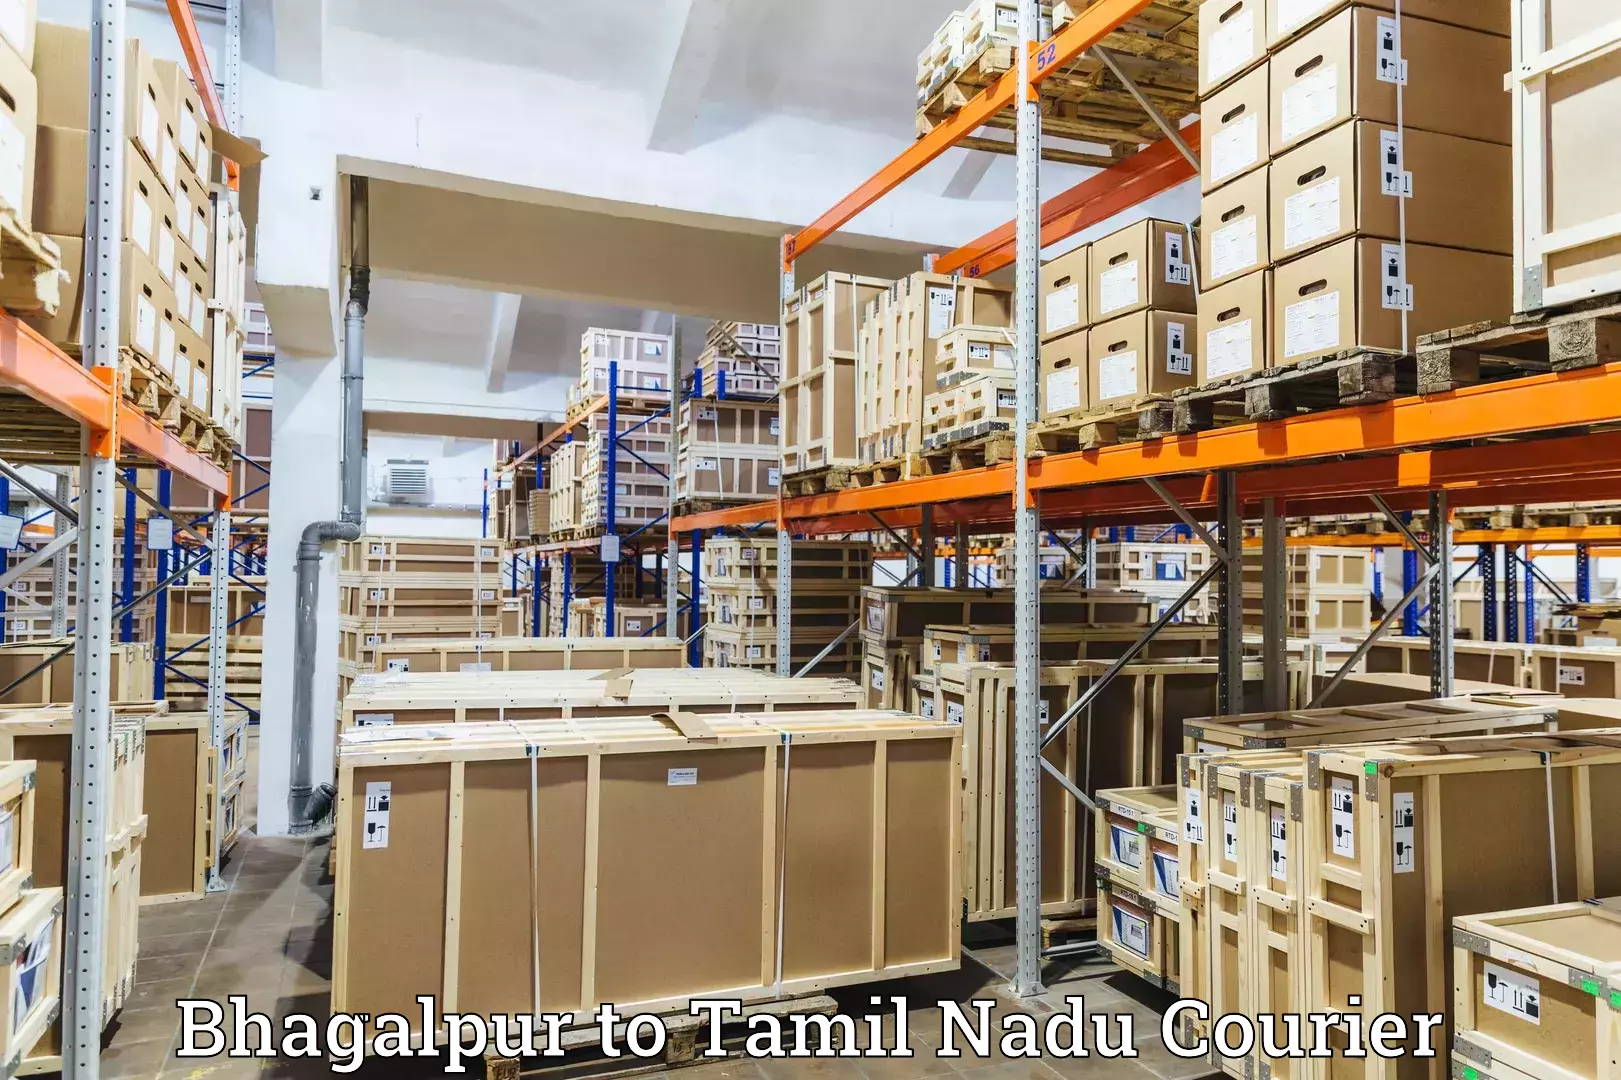 Professional courier handling Bhagalpur to Chennai Port